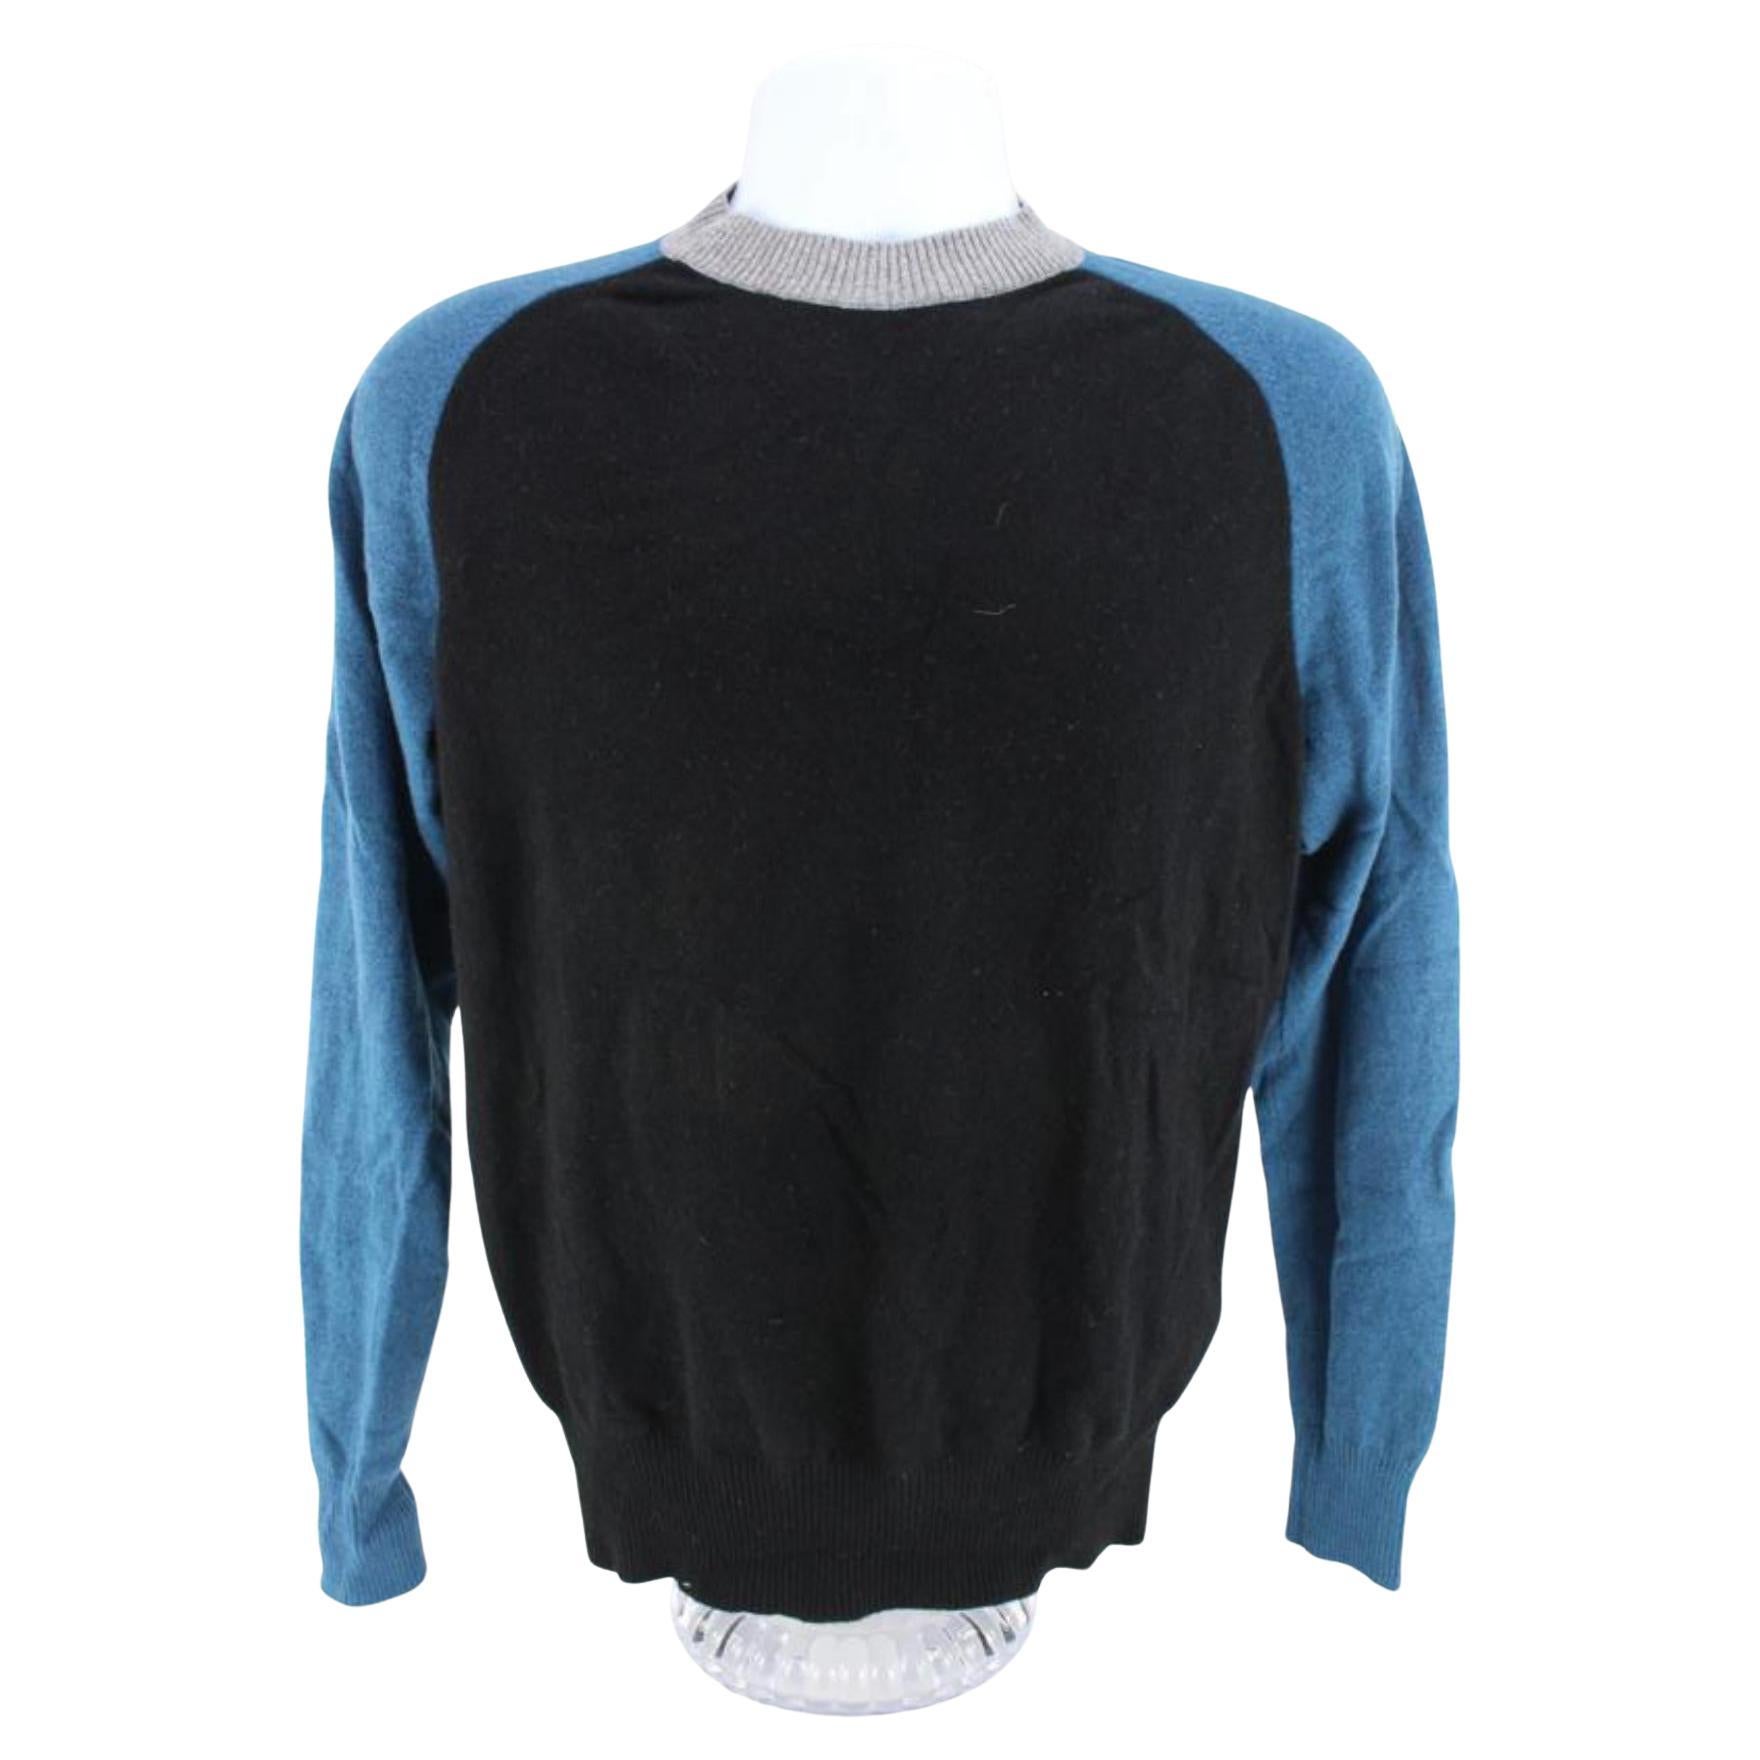 Louis Vuitton VIrgil Abloh Black x Blue Long Sleeve Sweater Shirt 3lz526s